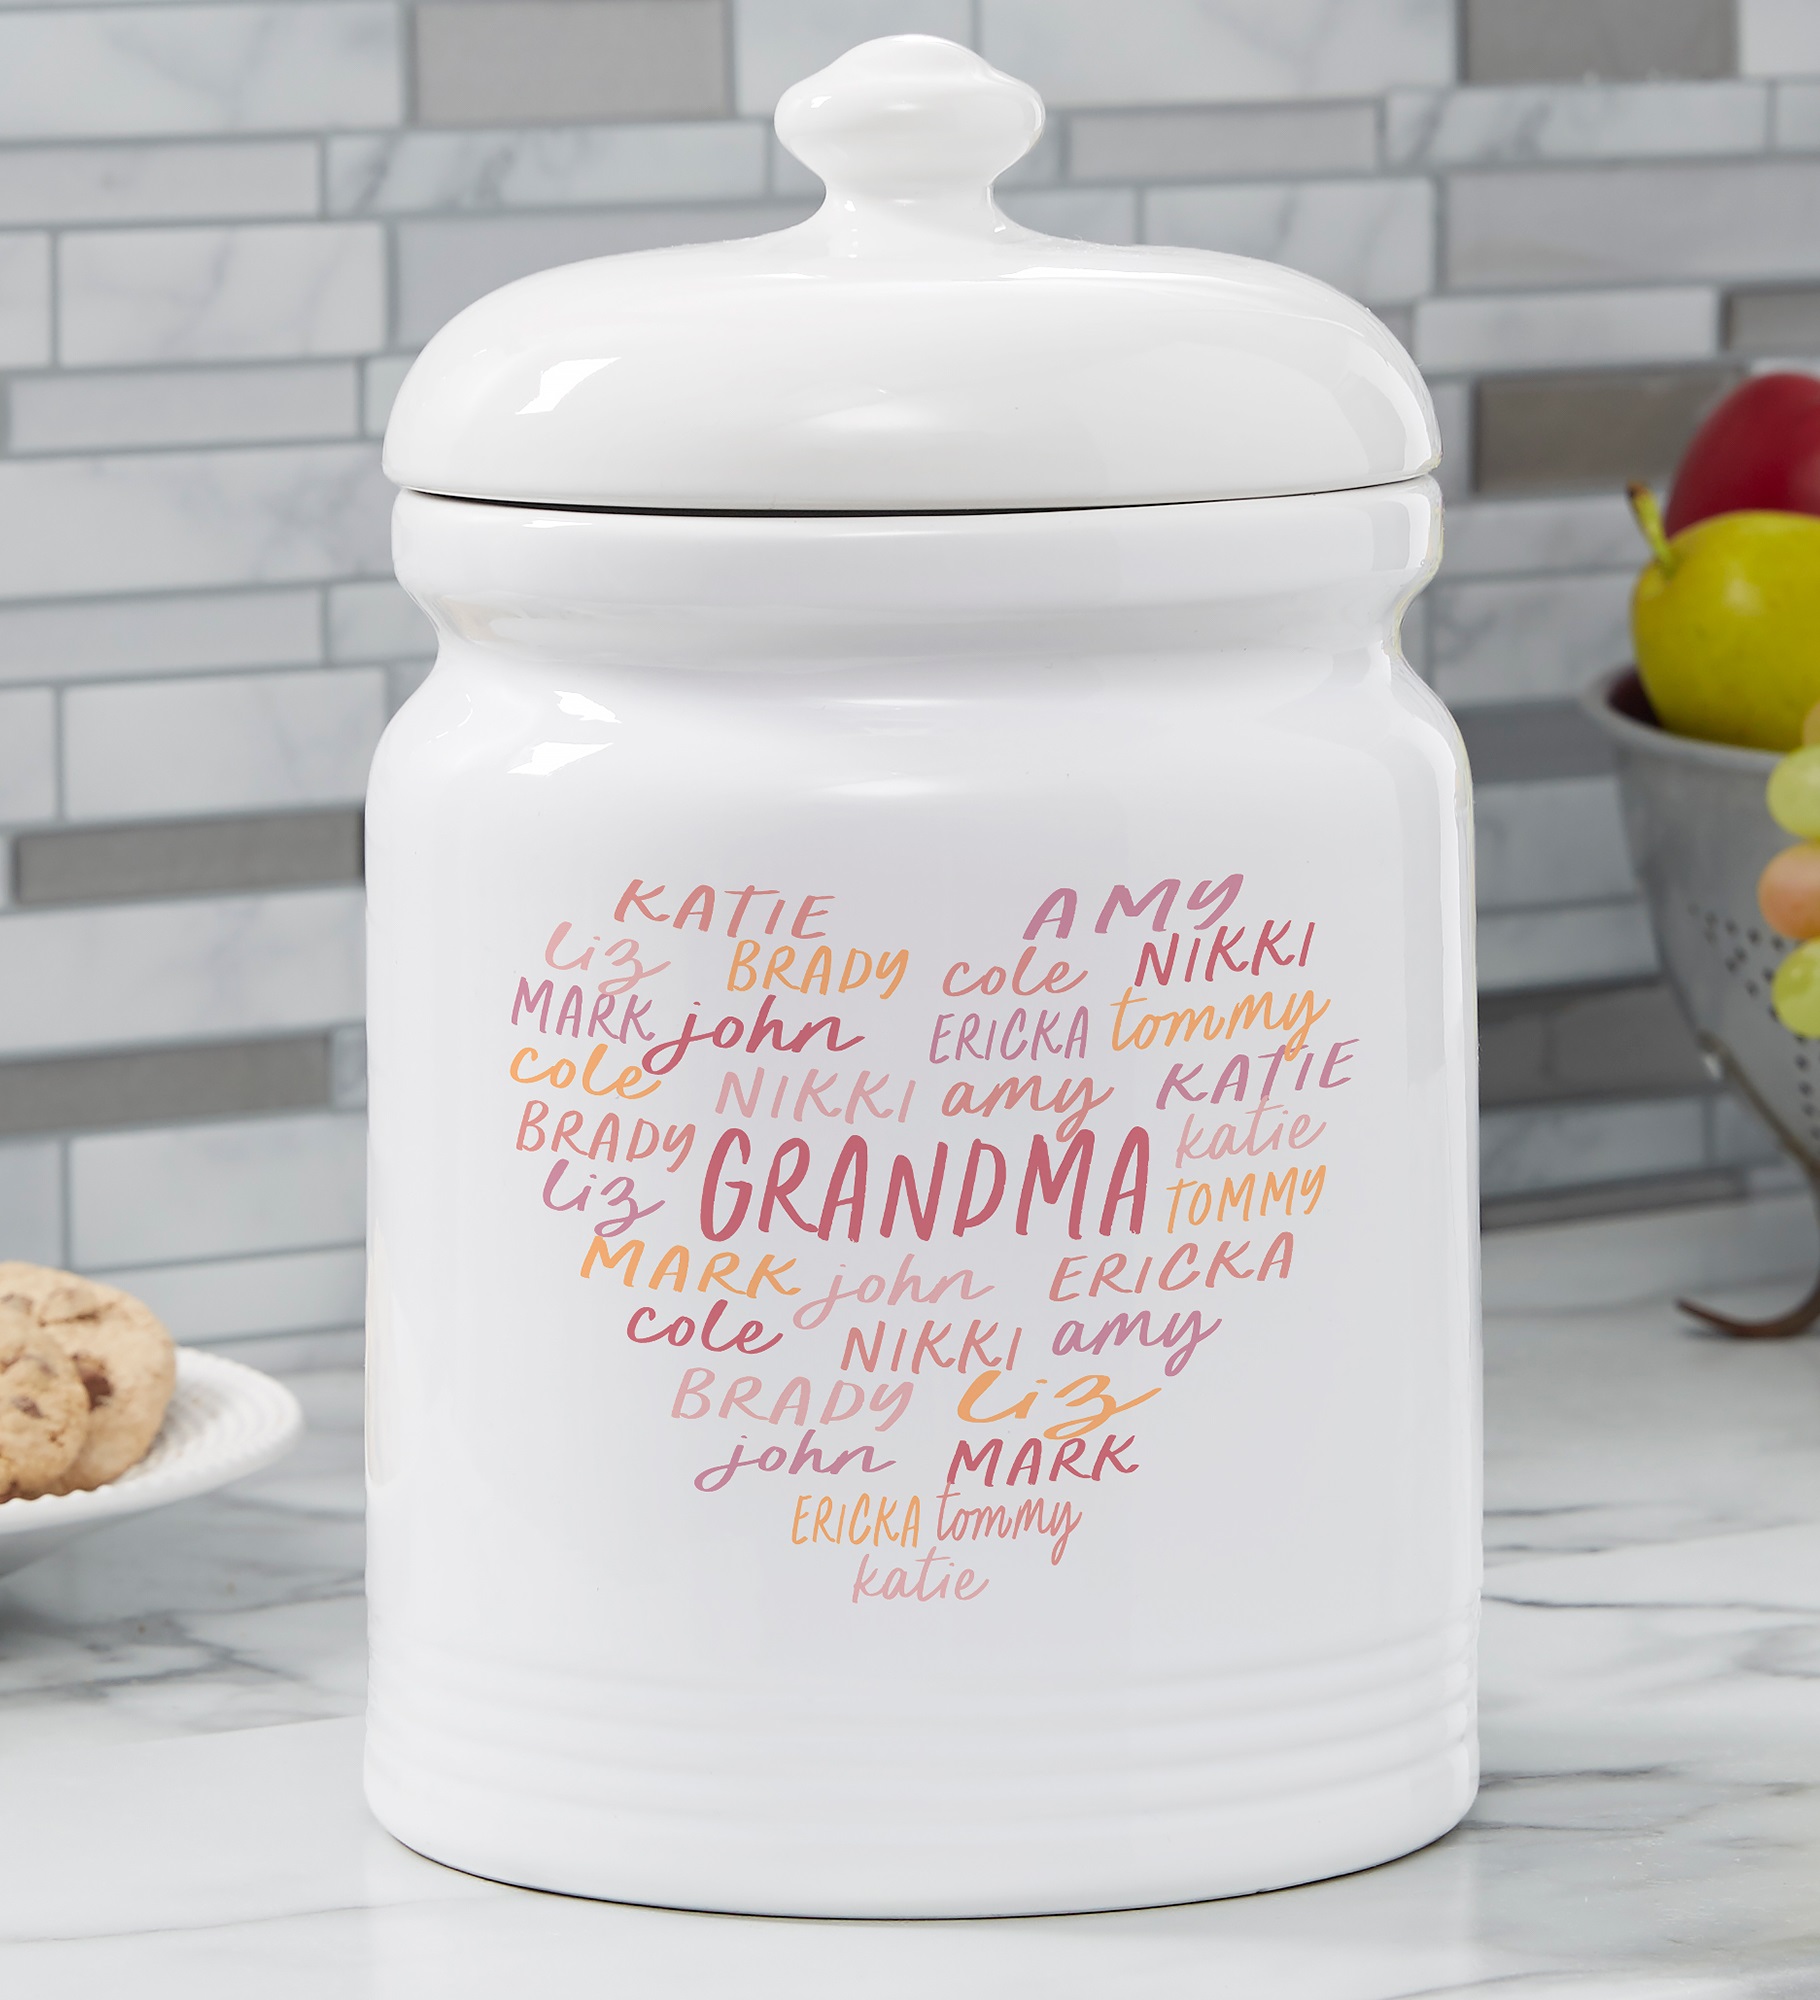 Grateful Heart Personalized Cookie Jar